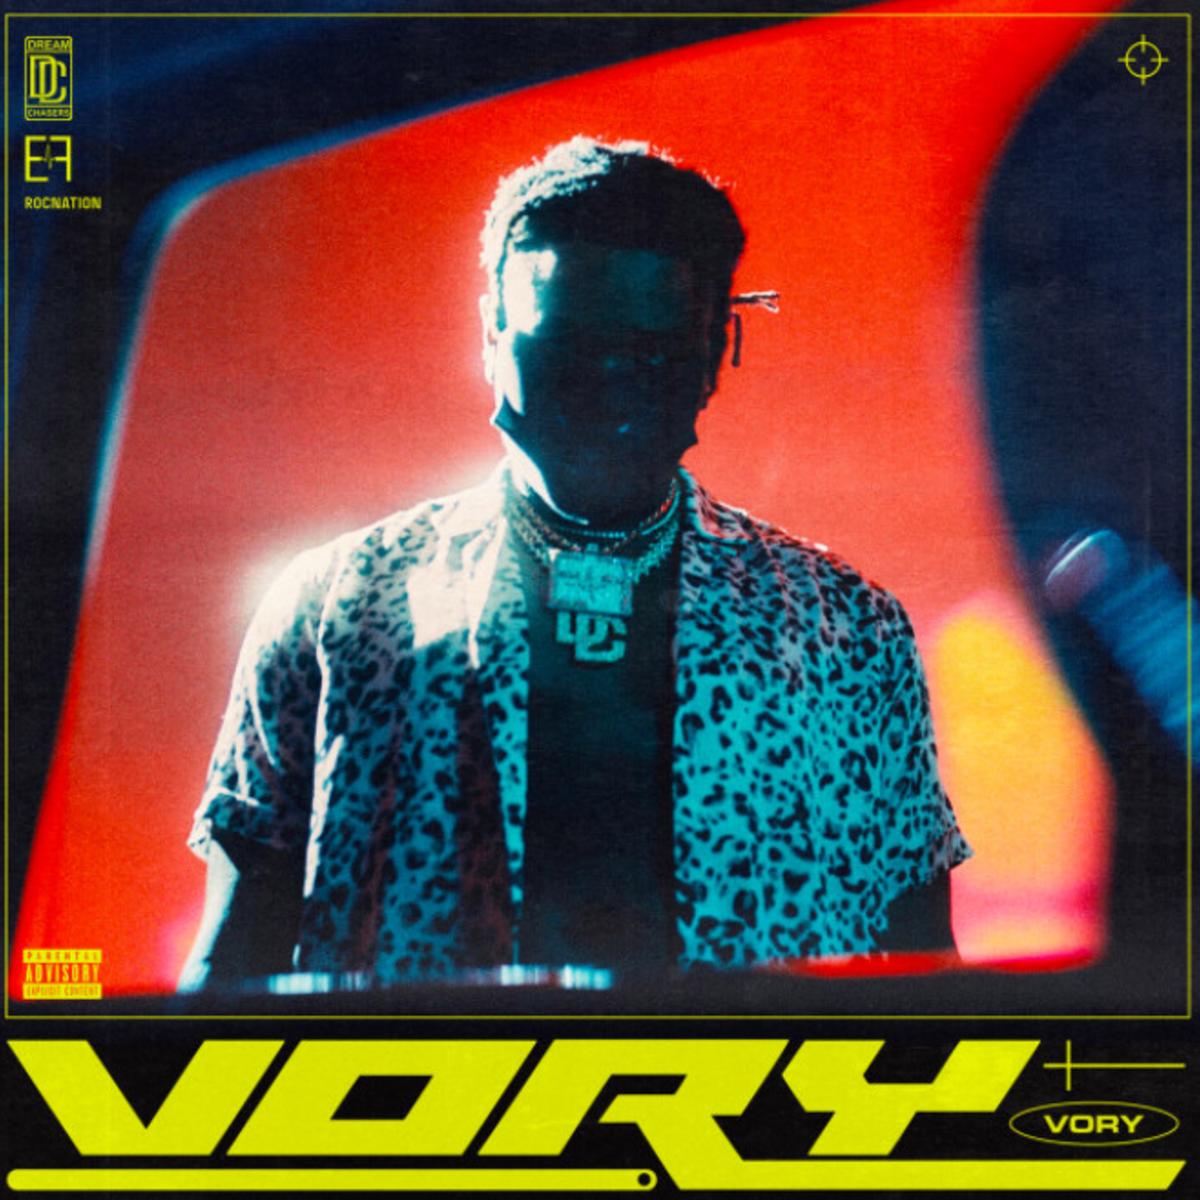 Listen To “VORY” by Vory